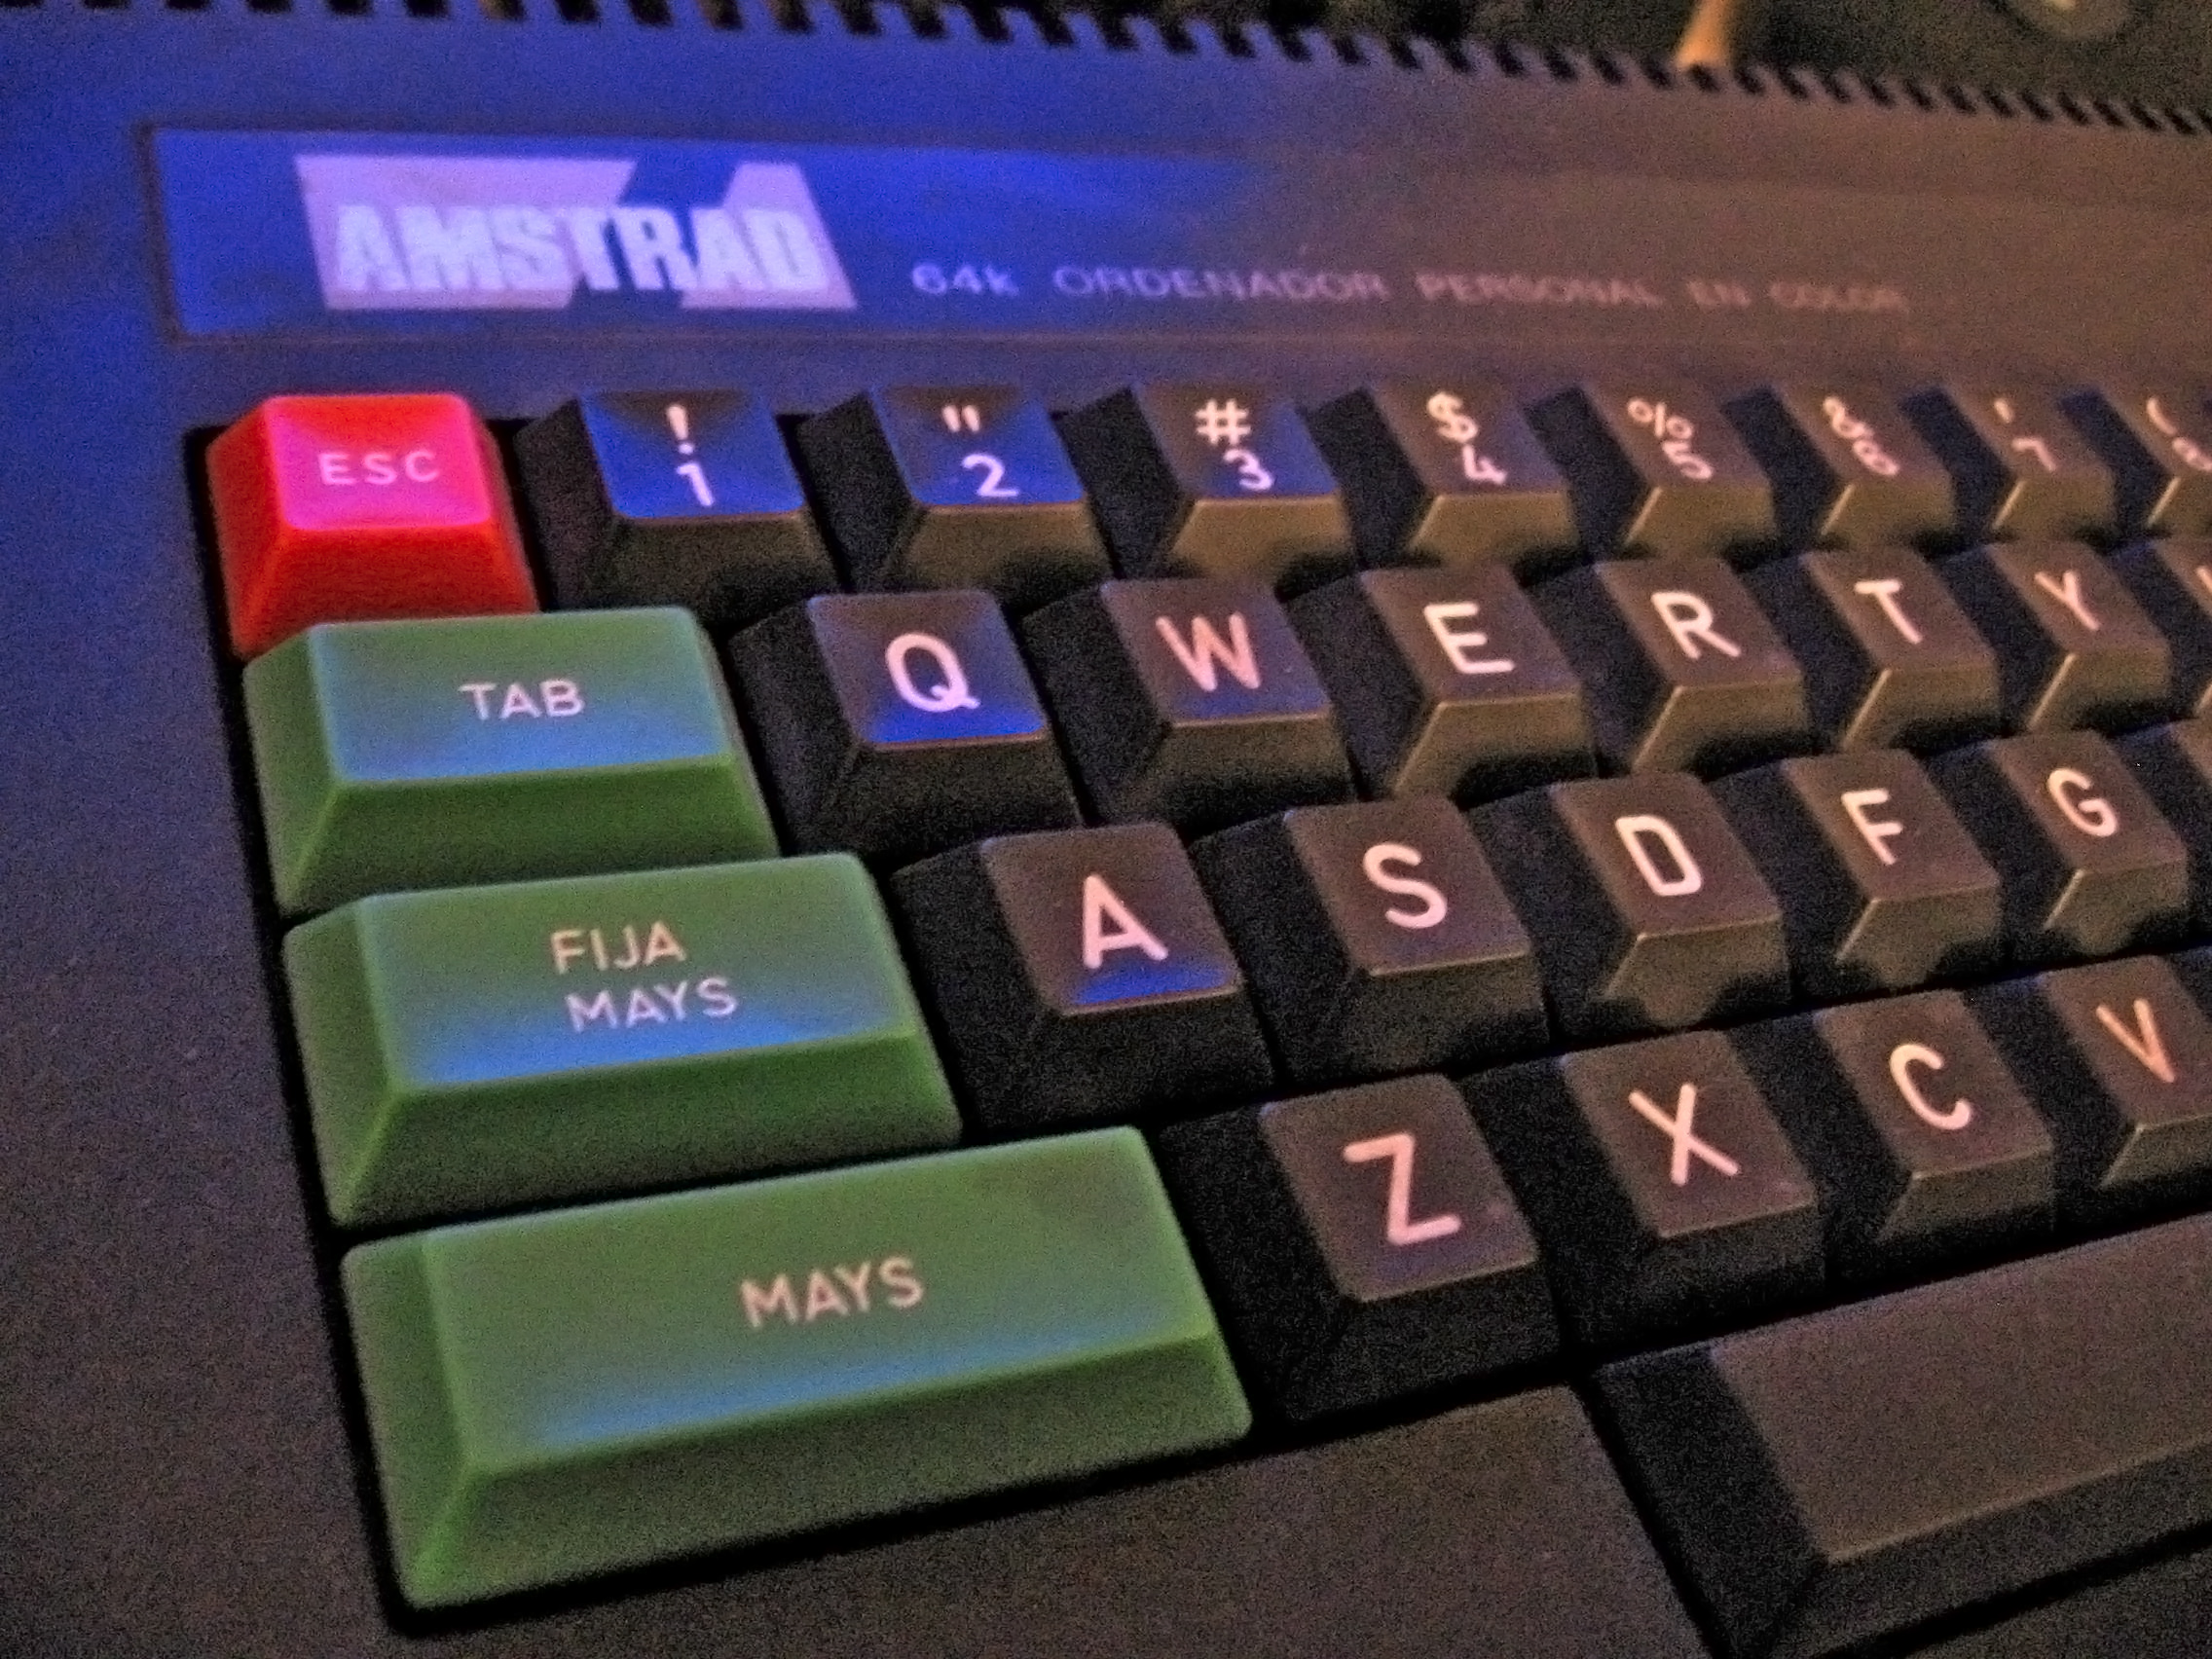 Amstrad CPC keyboard